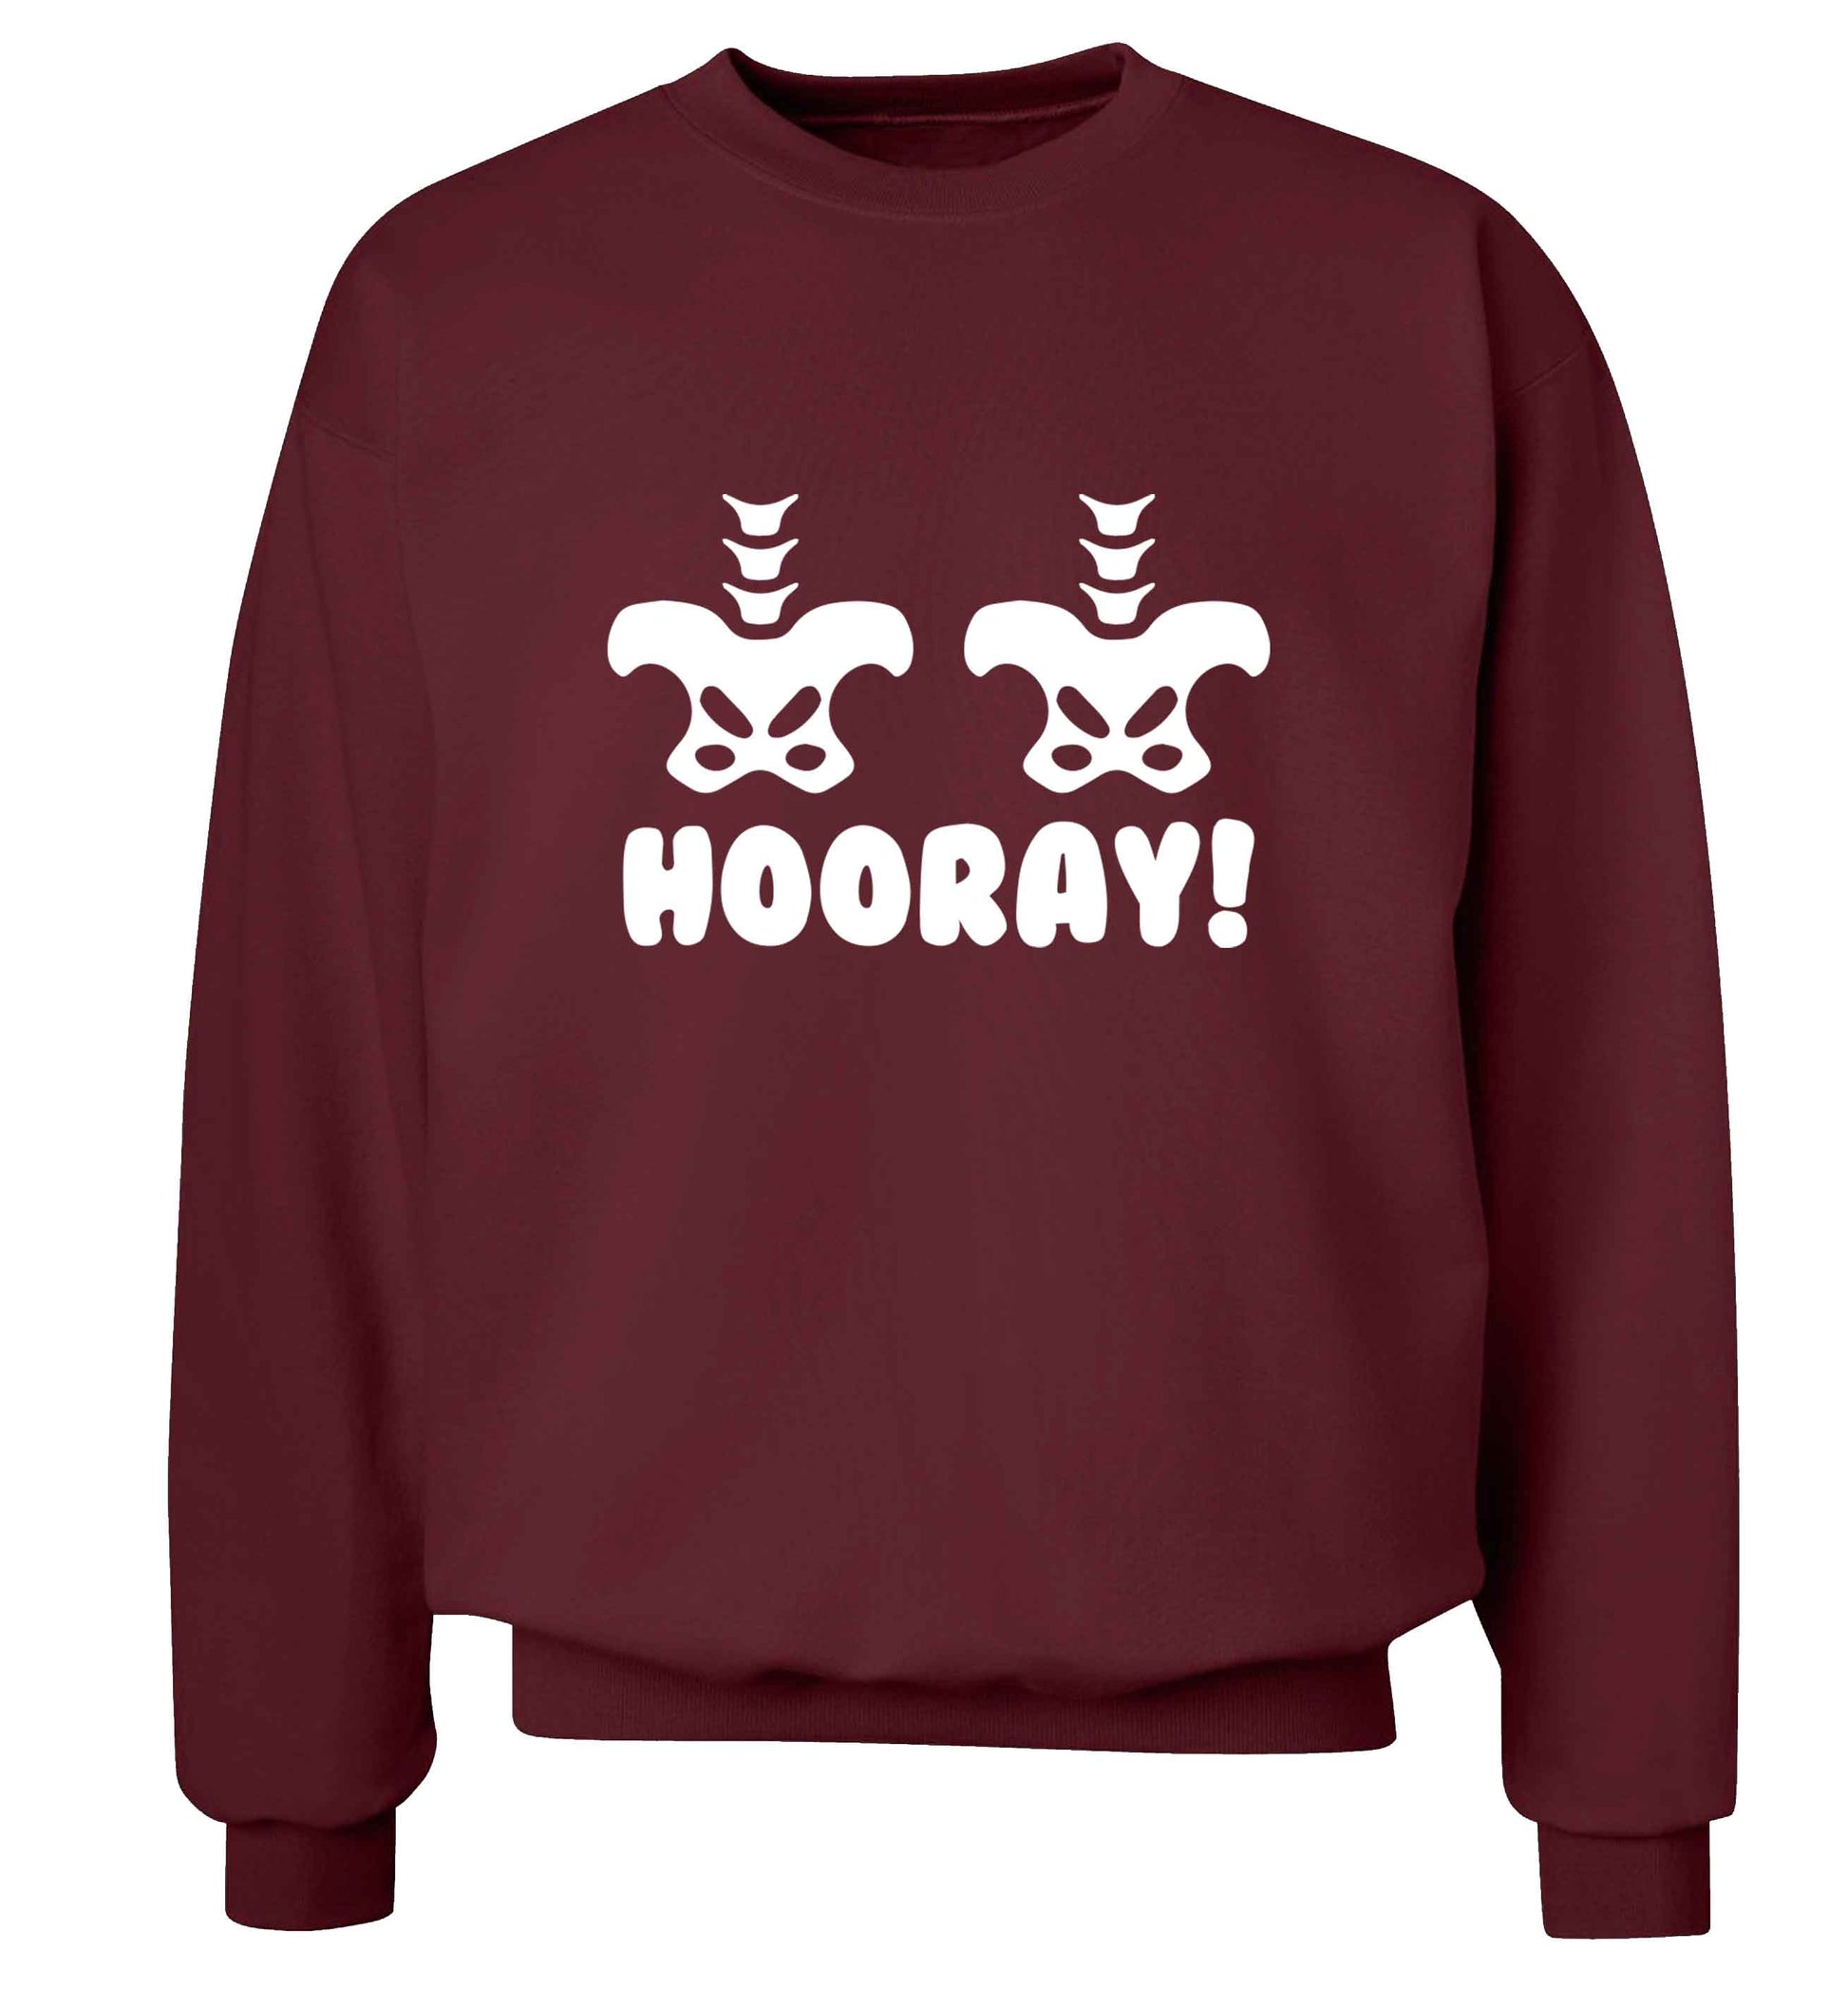 Hip Hip Hooray! adult's unisex maroon sweater 2XL